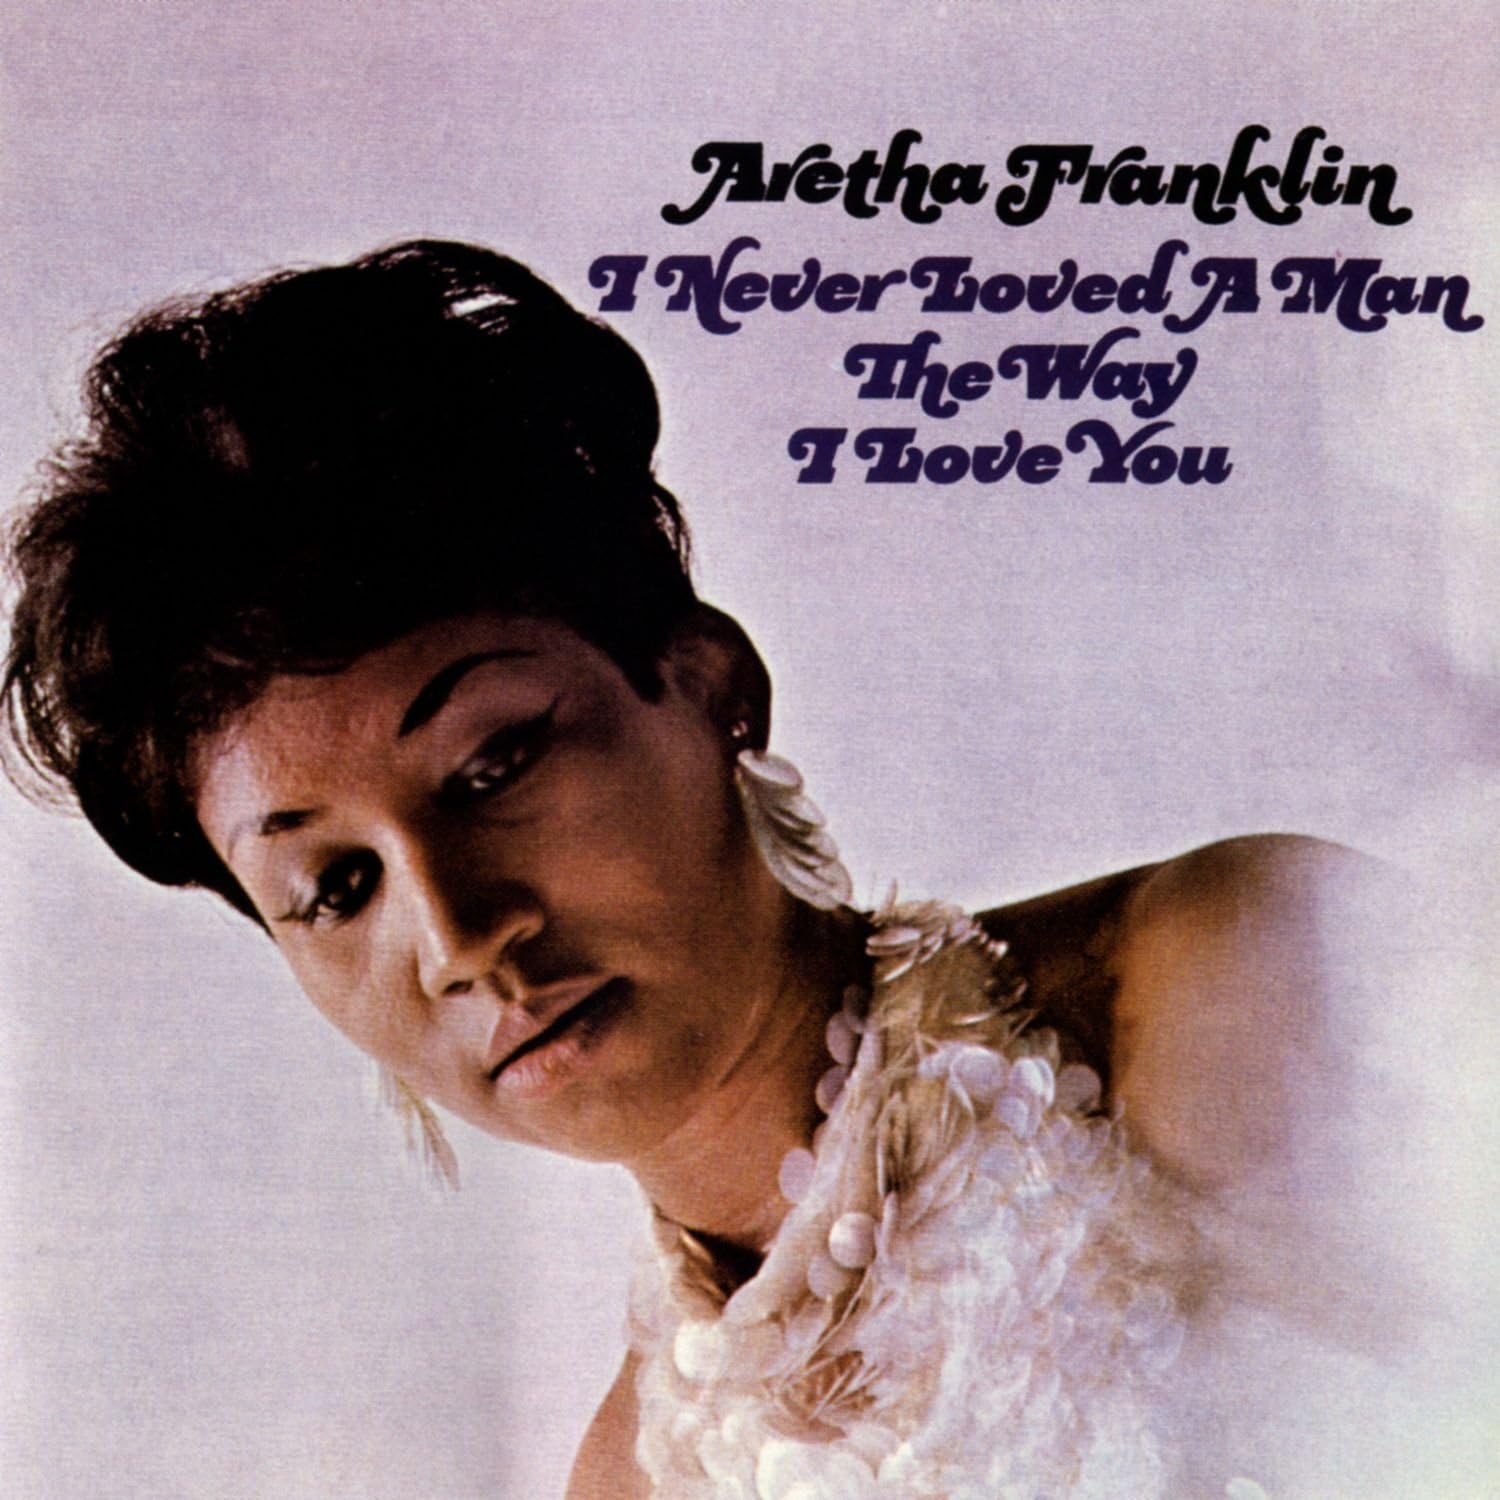 Copertina Vinile 33 giri I Never Loved a Man the Way I Love You di Aretha Franklin